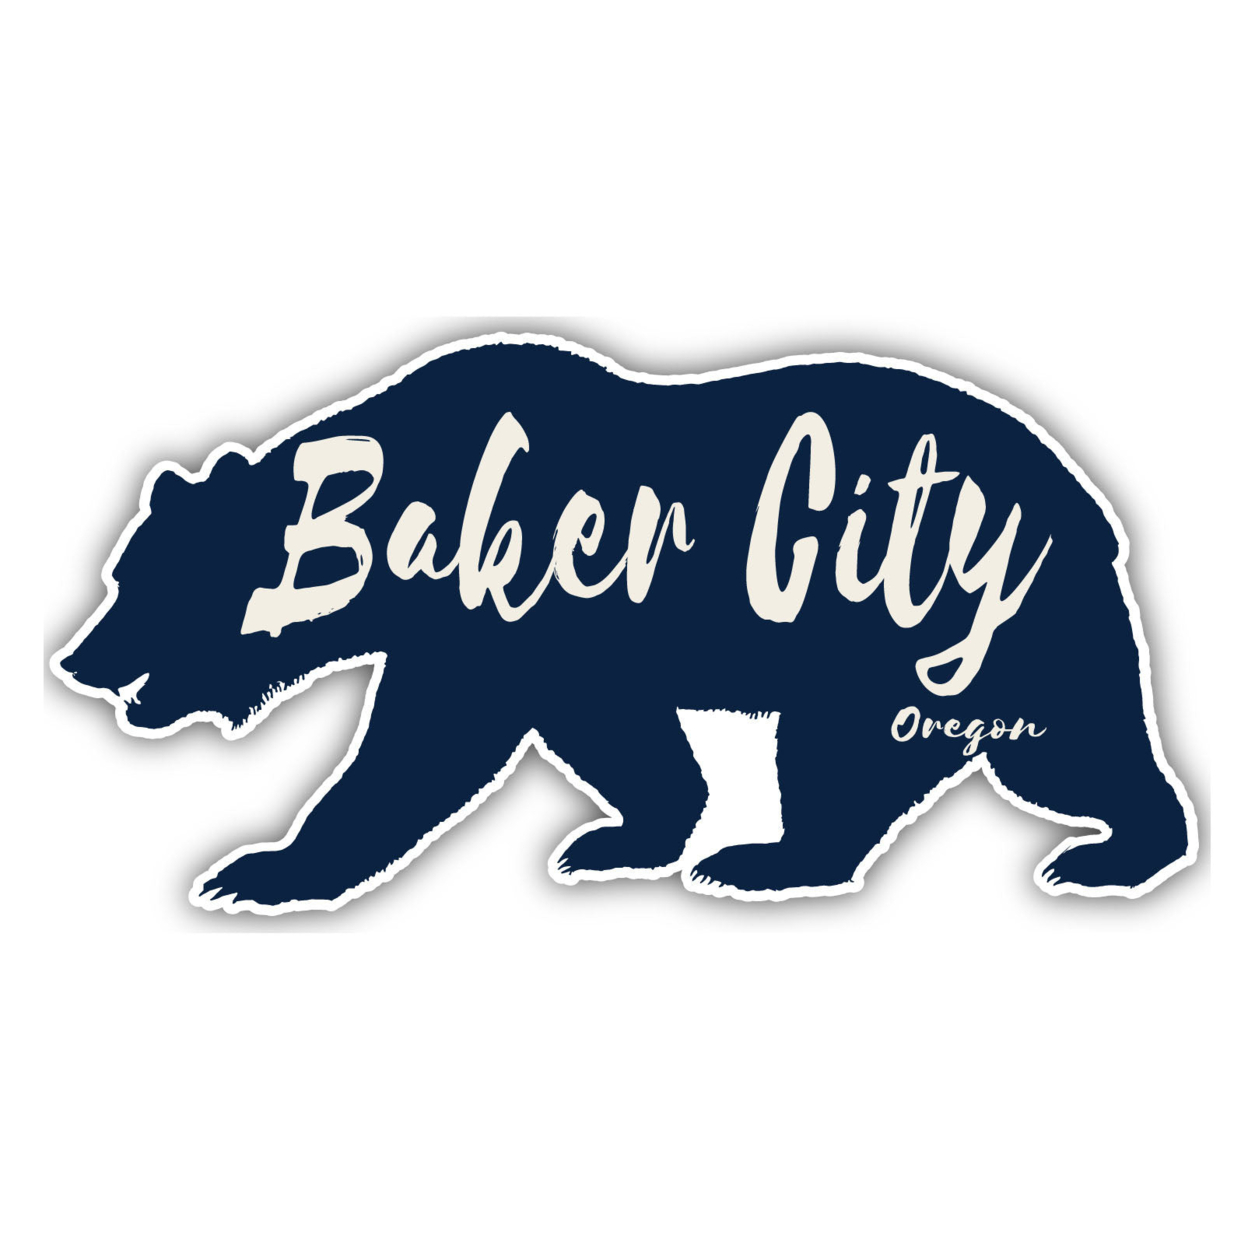 Baker City Oregon Souvenir Decorative Stickers (Choose Theme And Size) - Single Unit, 12-Inch, Adventures Awaits